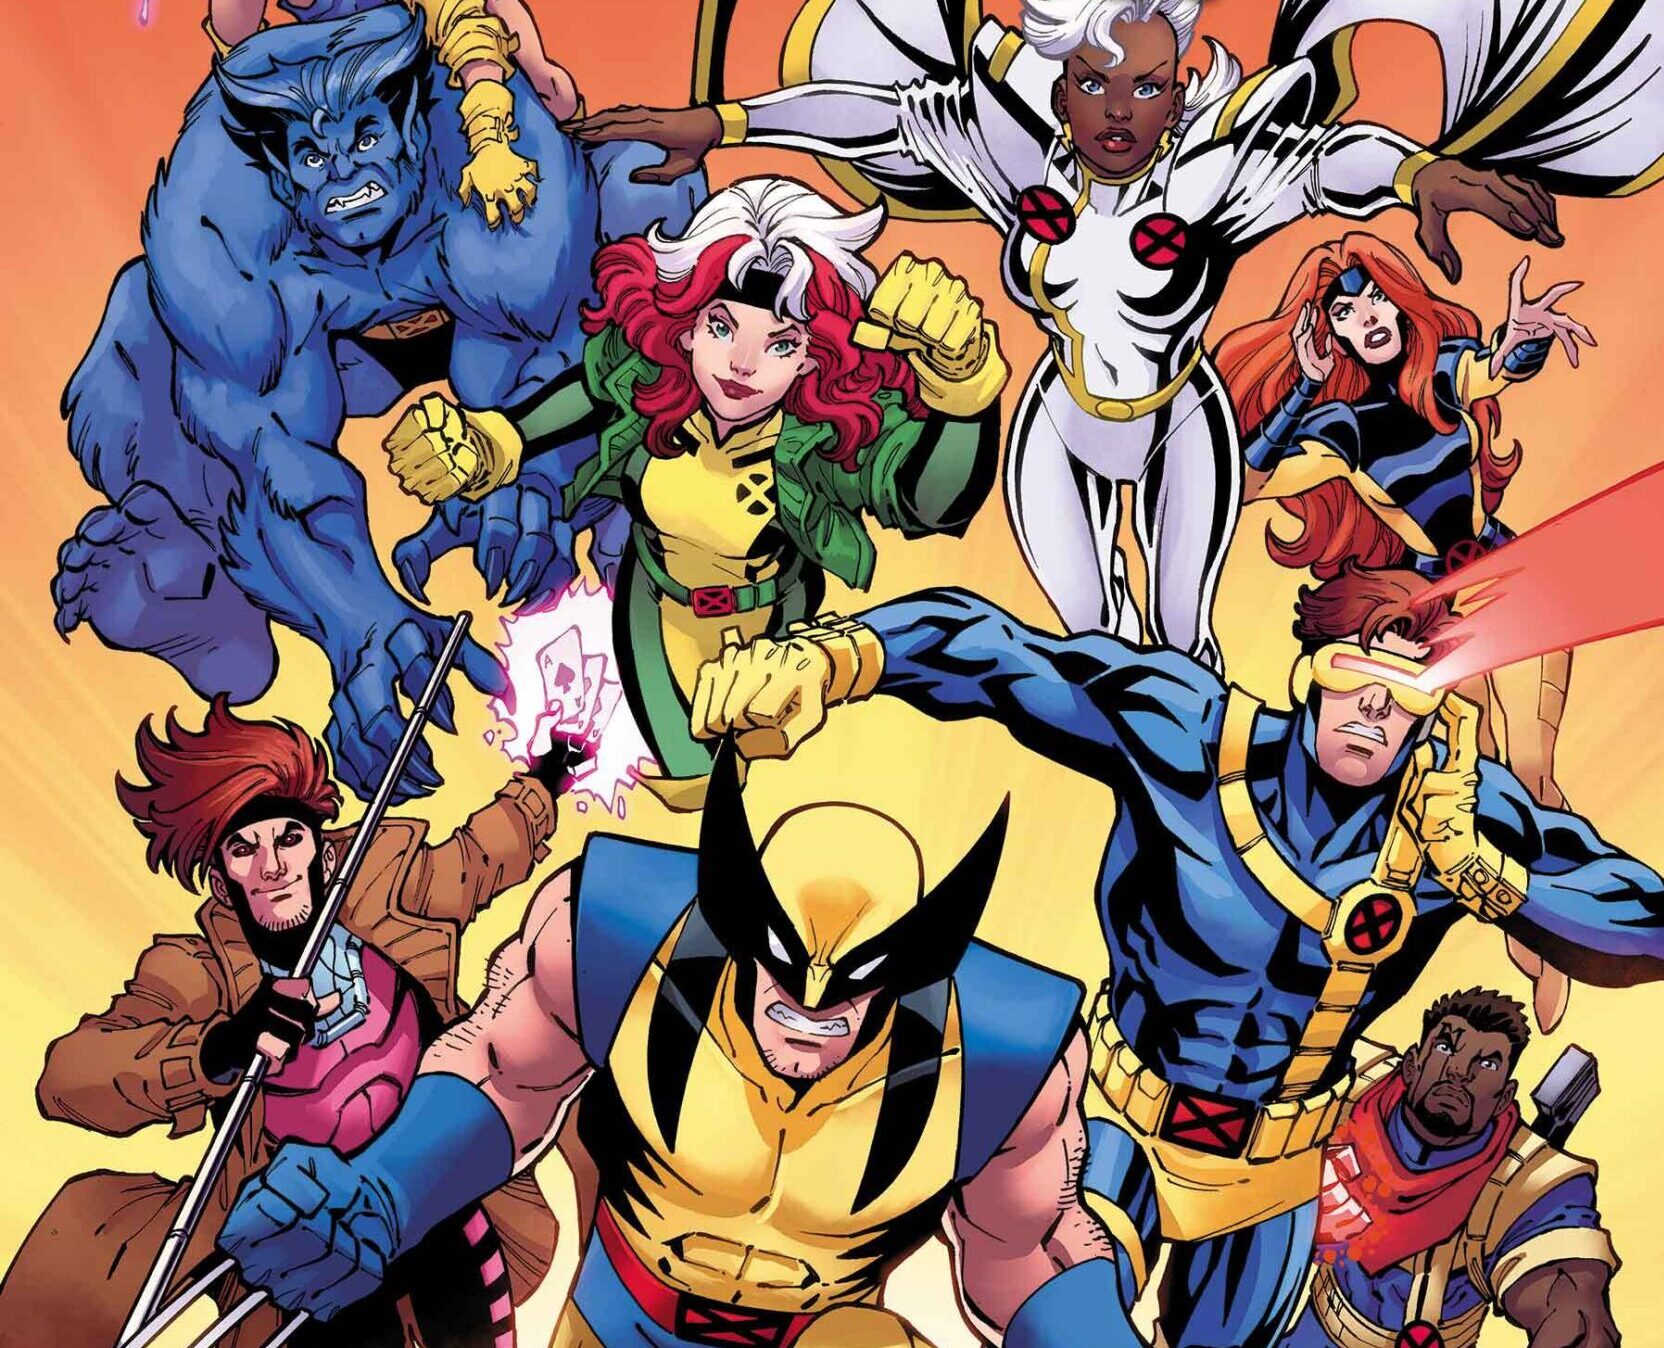 Marvel Unleashes Nostalgia With X-MEN ’97 Comic Series